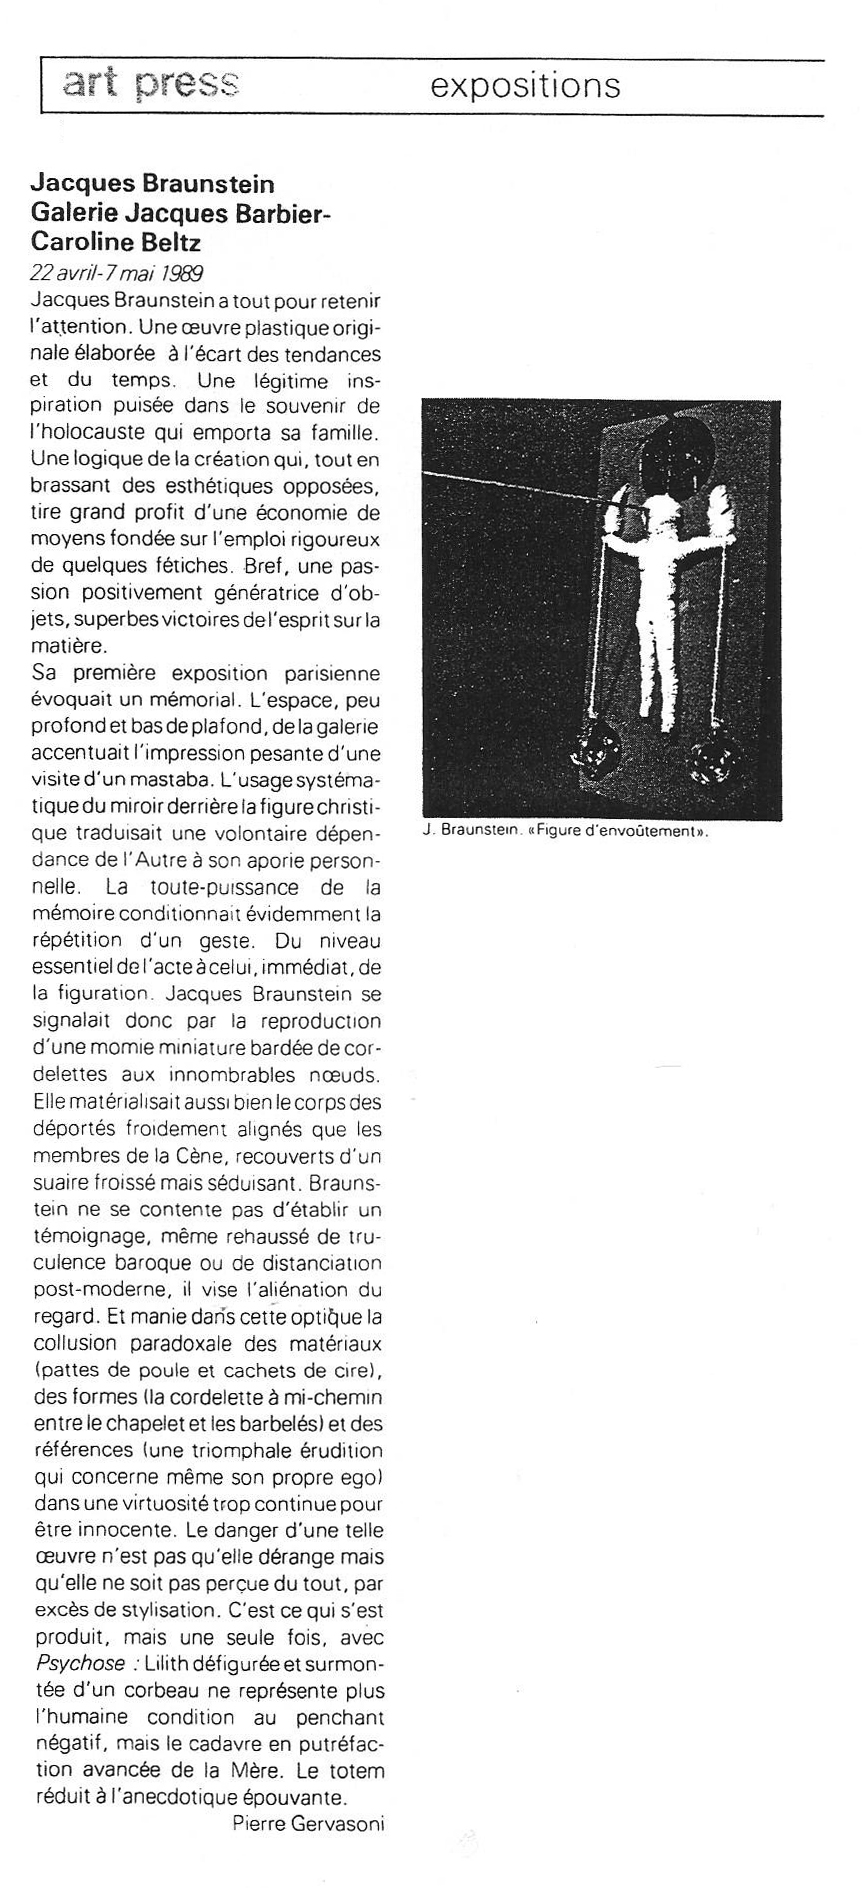 Revue de Presse - Pierre Gervasoni - Juin 1989 - Art press magazine